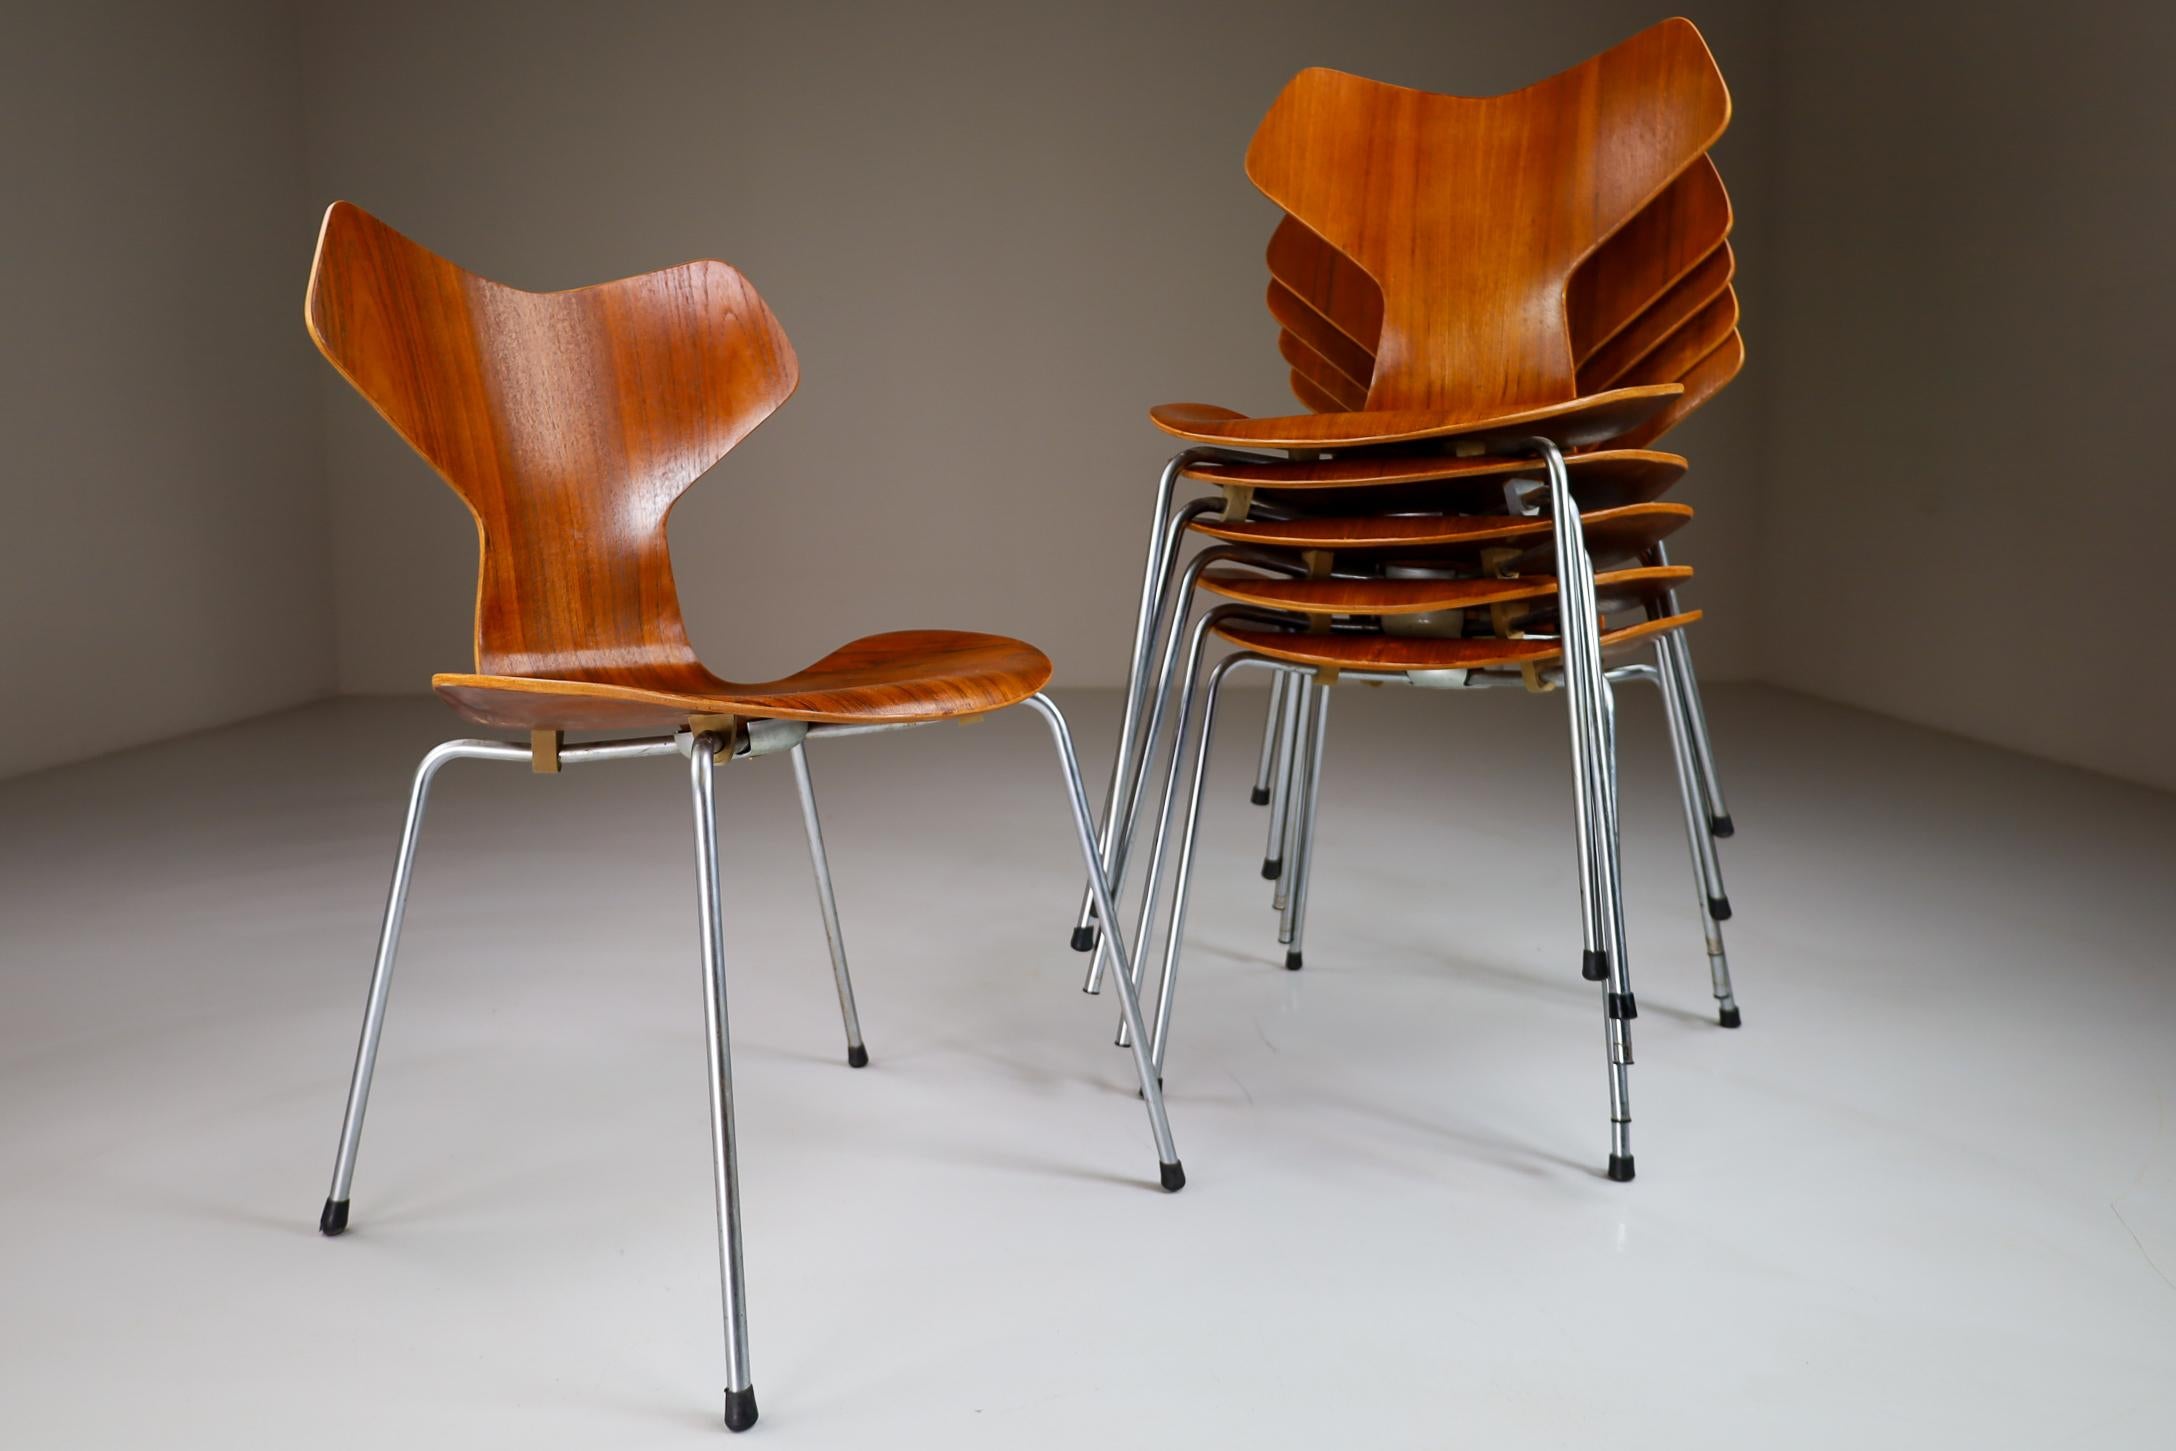 Set/6 Arne Jacobsen Grand Prix dining chairs For Fritz Hansen, Denmark 1960s. Produced by Fritz Hansen in Denmark. This wonderful set of 6 model #0765 stacking dining chairs in a wonderful color and patina, were designed by Arne Jacobsen for Fritz